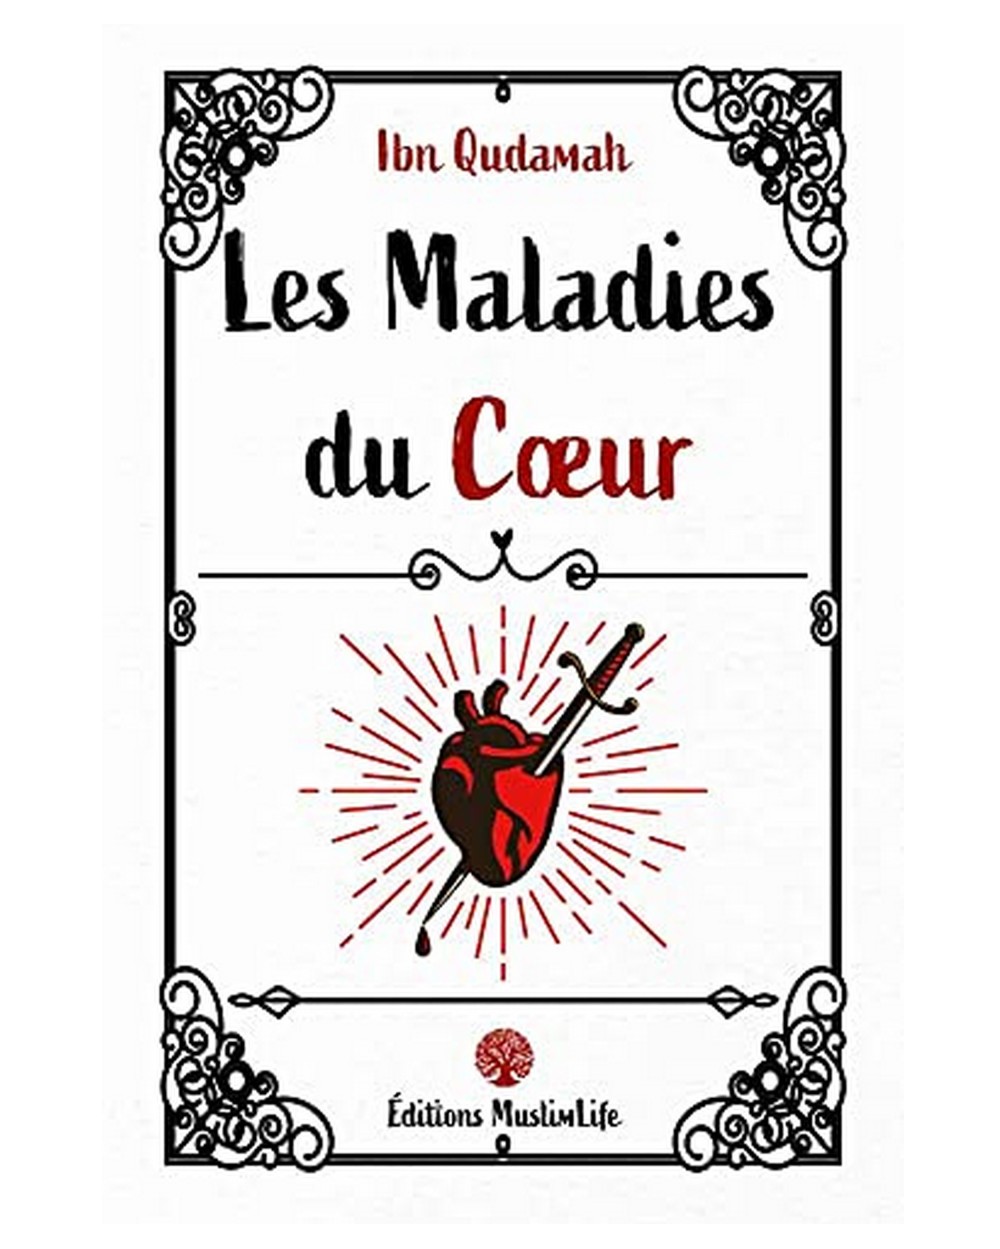 Les maladies du coeur - Ibn Qudamah - Editions Muslimlife